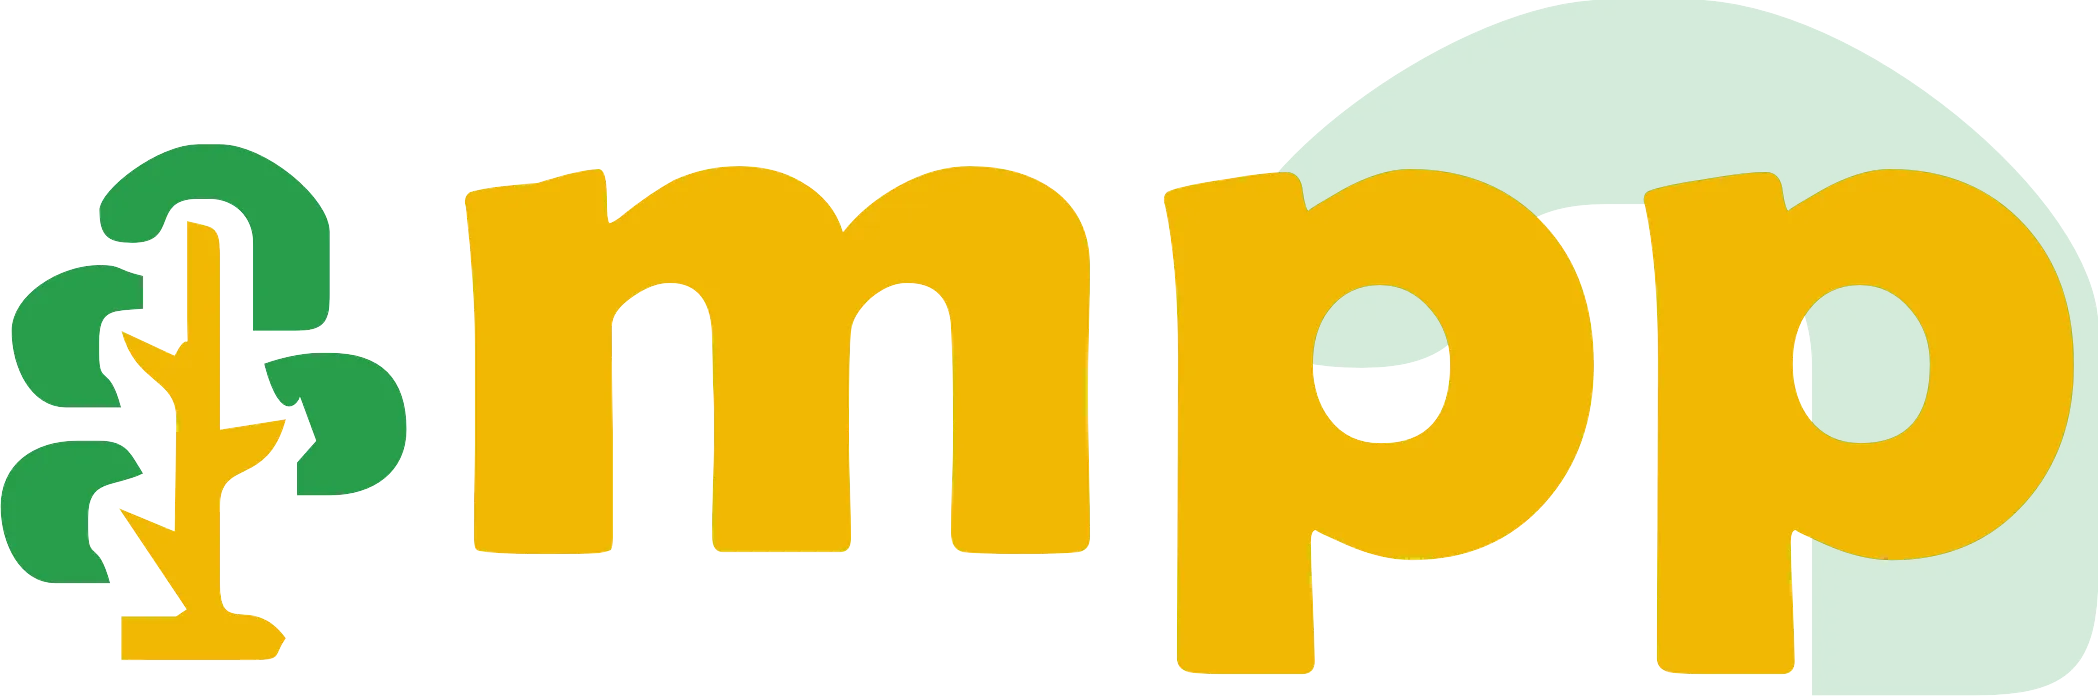 mpp logo